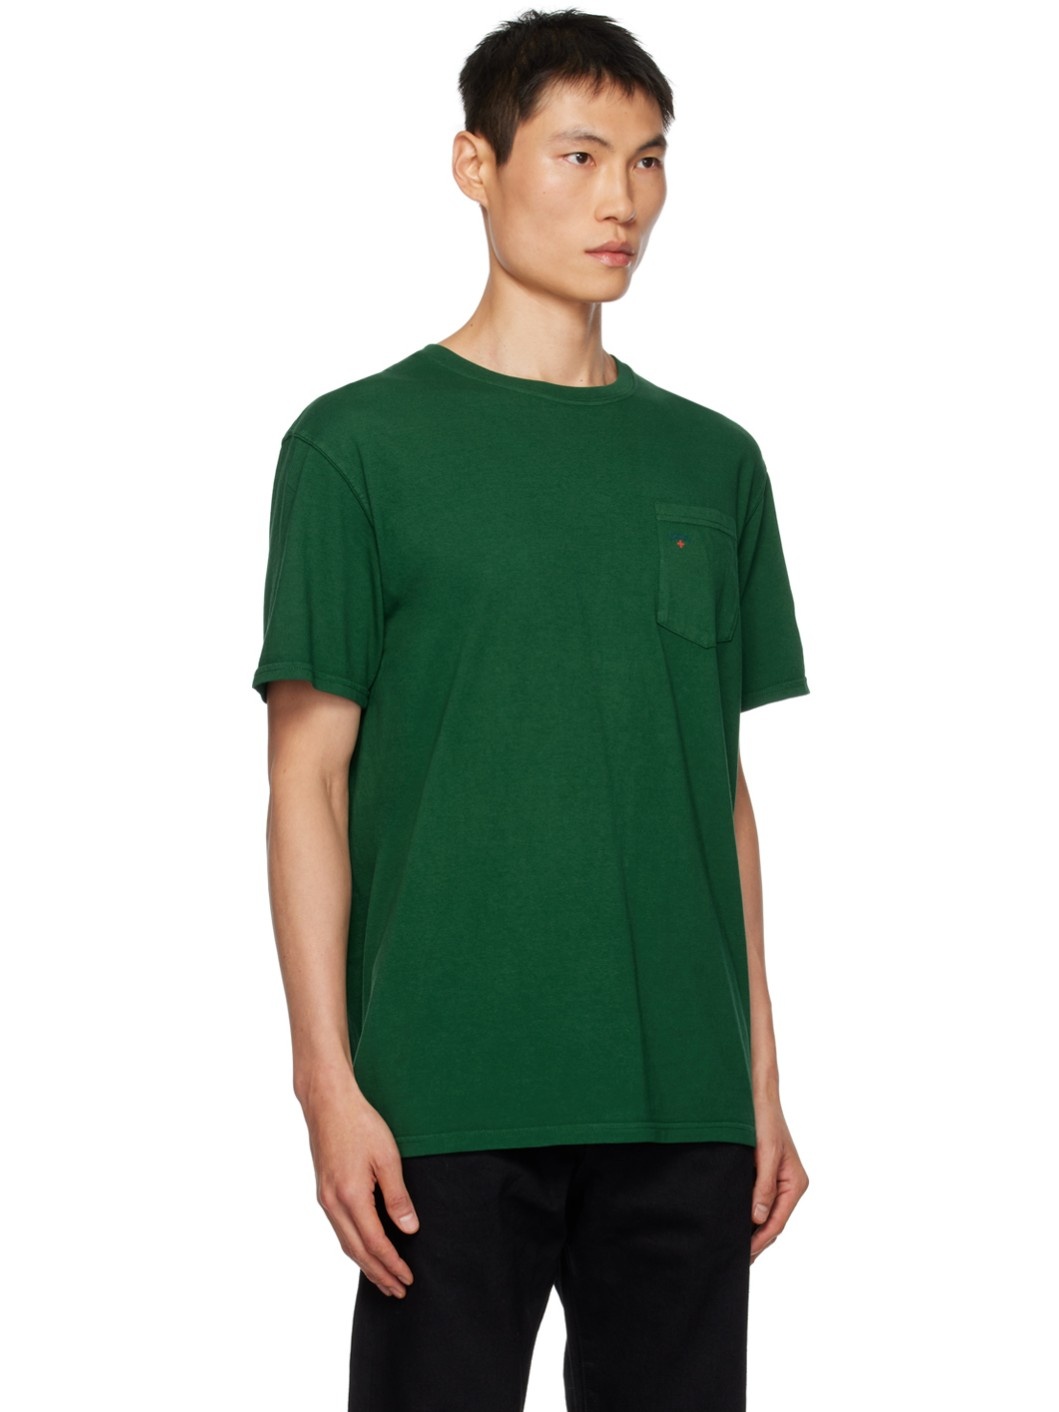 Green Pocket T-Shirt - 2